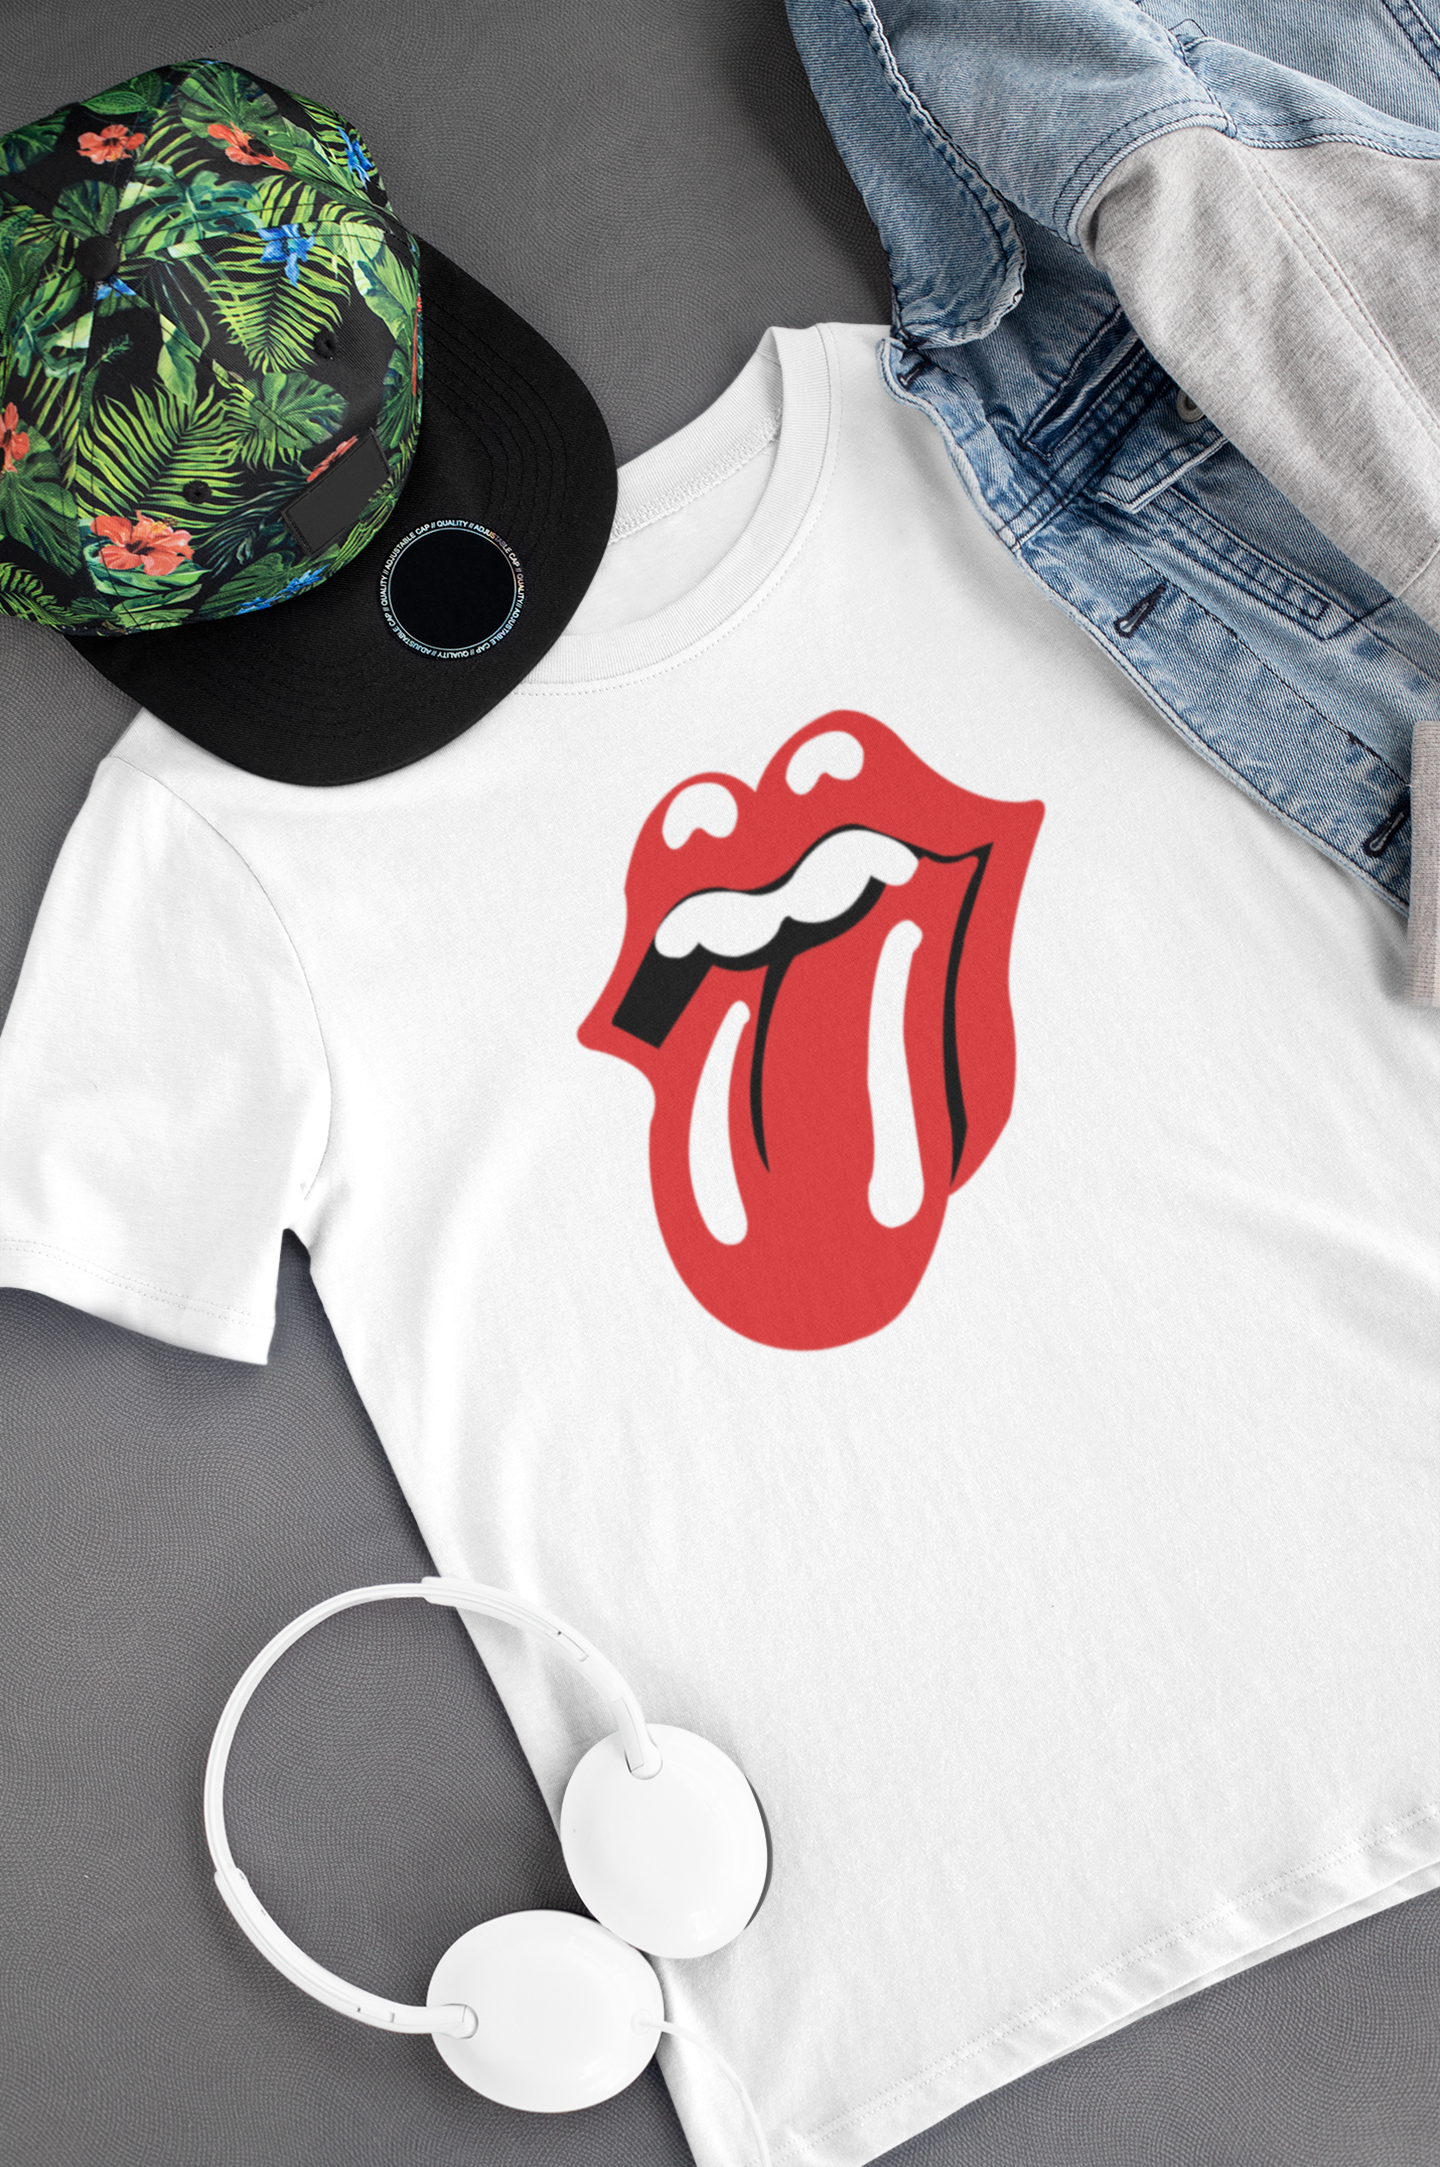 Camiseta "The Rolling Stones" Clássica - Música